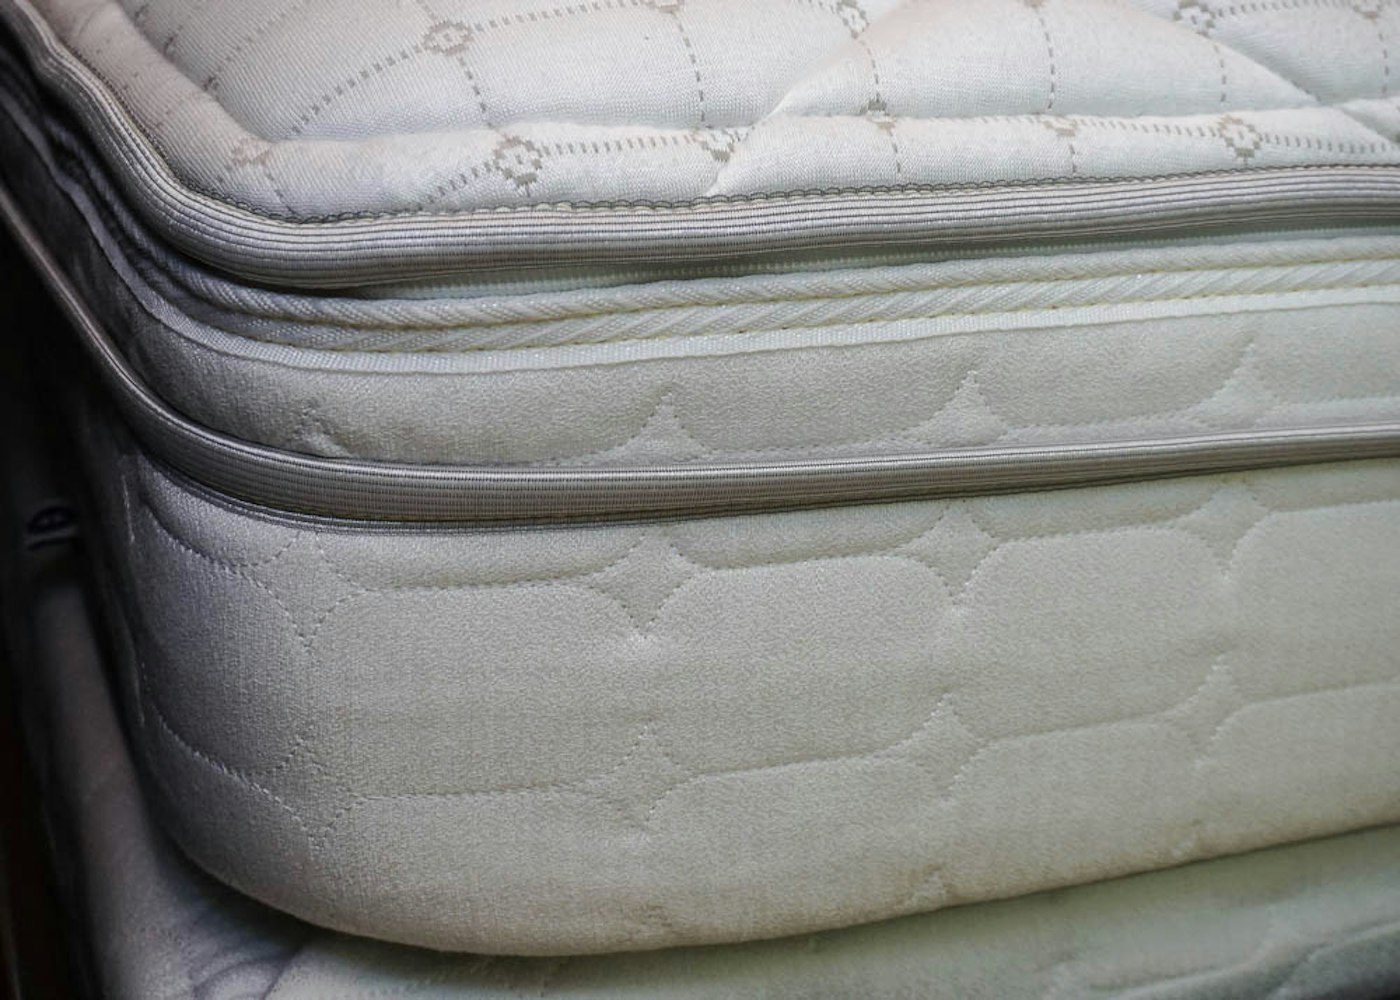 p5 flextop king mattress